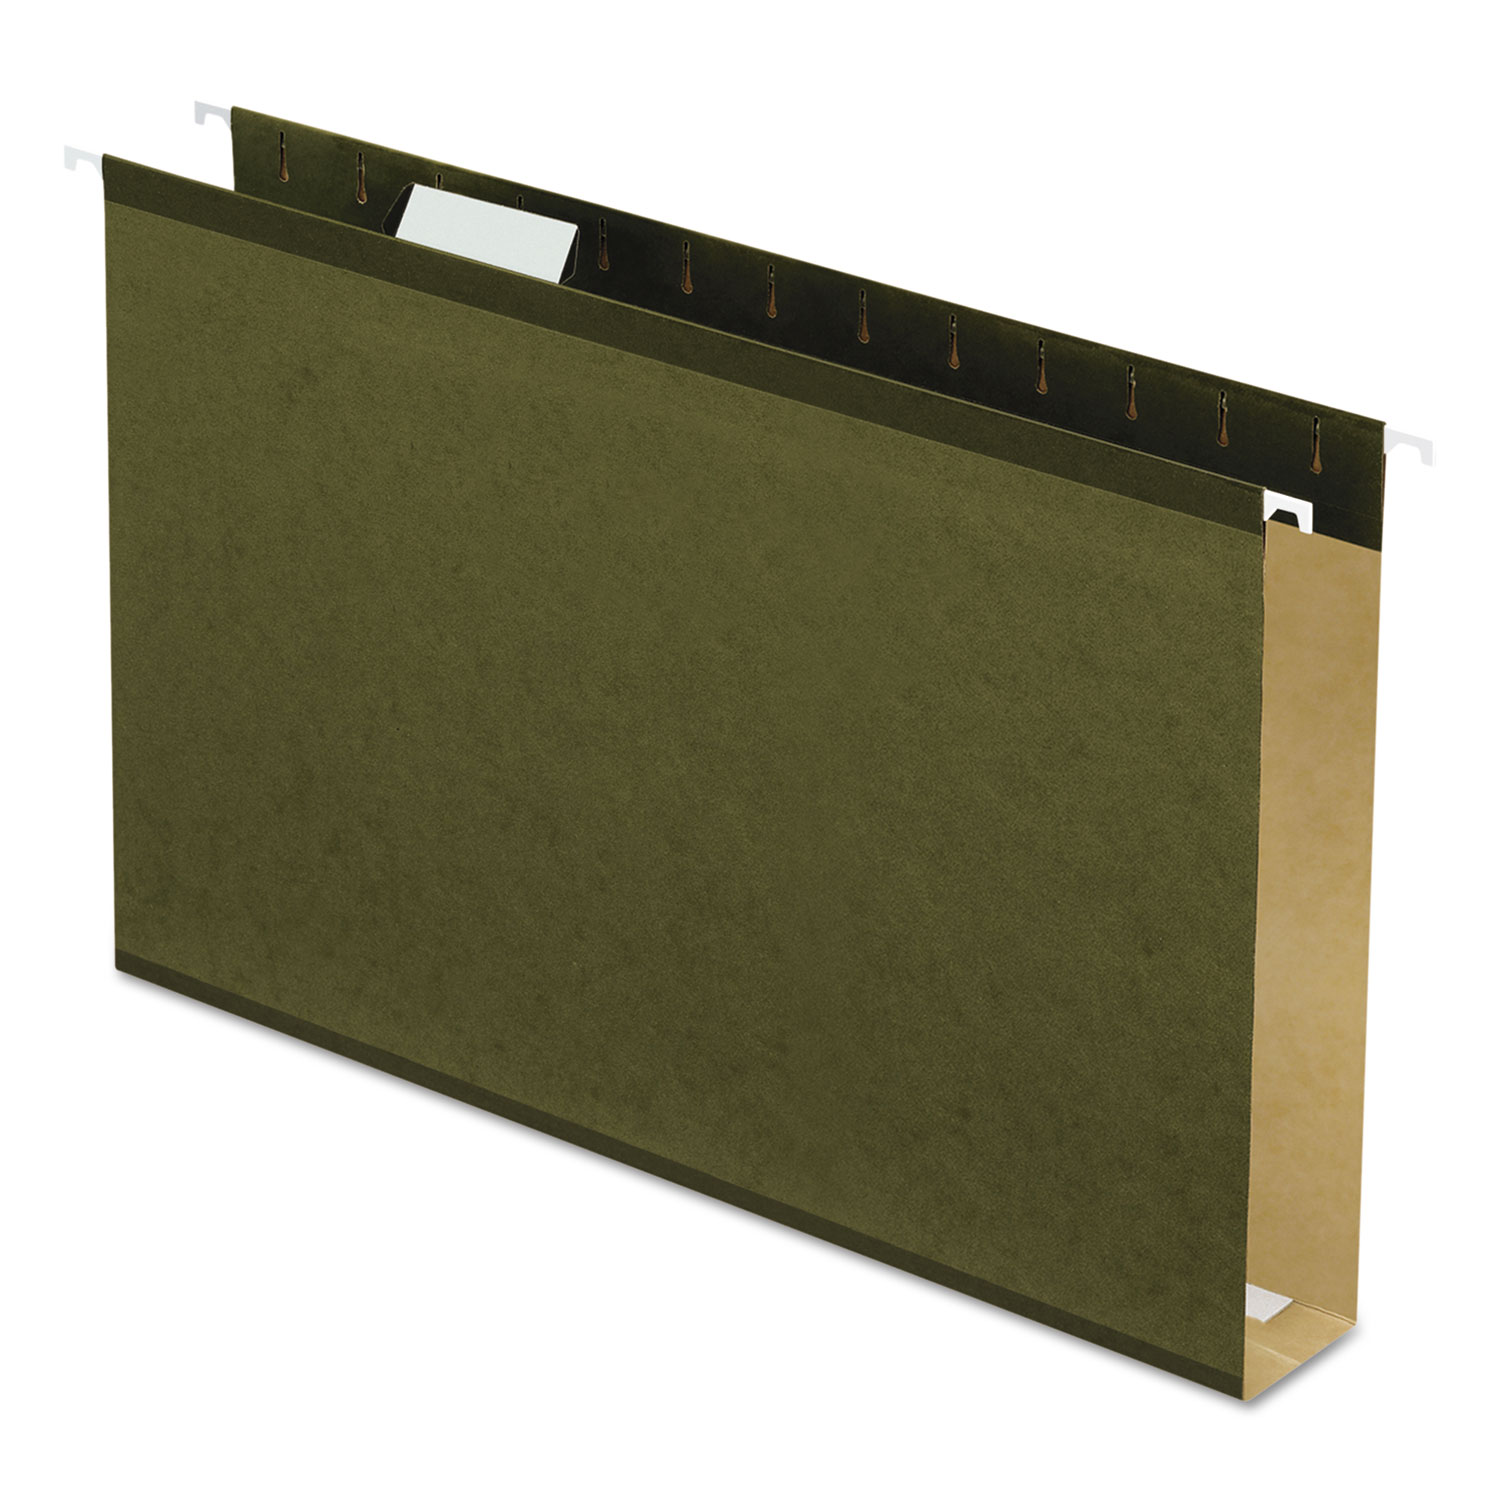  Pendaflex 04153X2 Extra Capacity Reinforced Hanging File Folders with Box Bottom, Legal Size, 1/5-Cut Tab, Standard Green, 25/Box (PFX4153X2) 